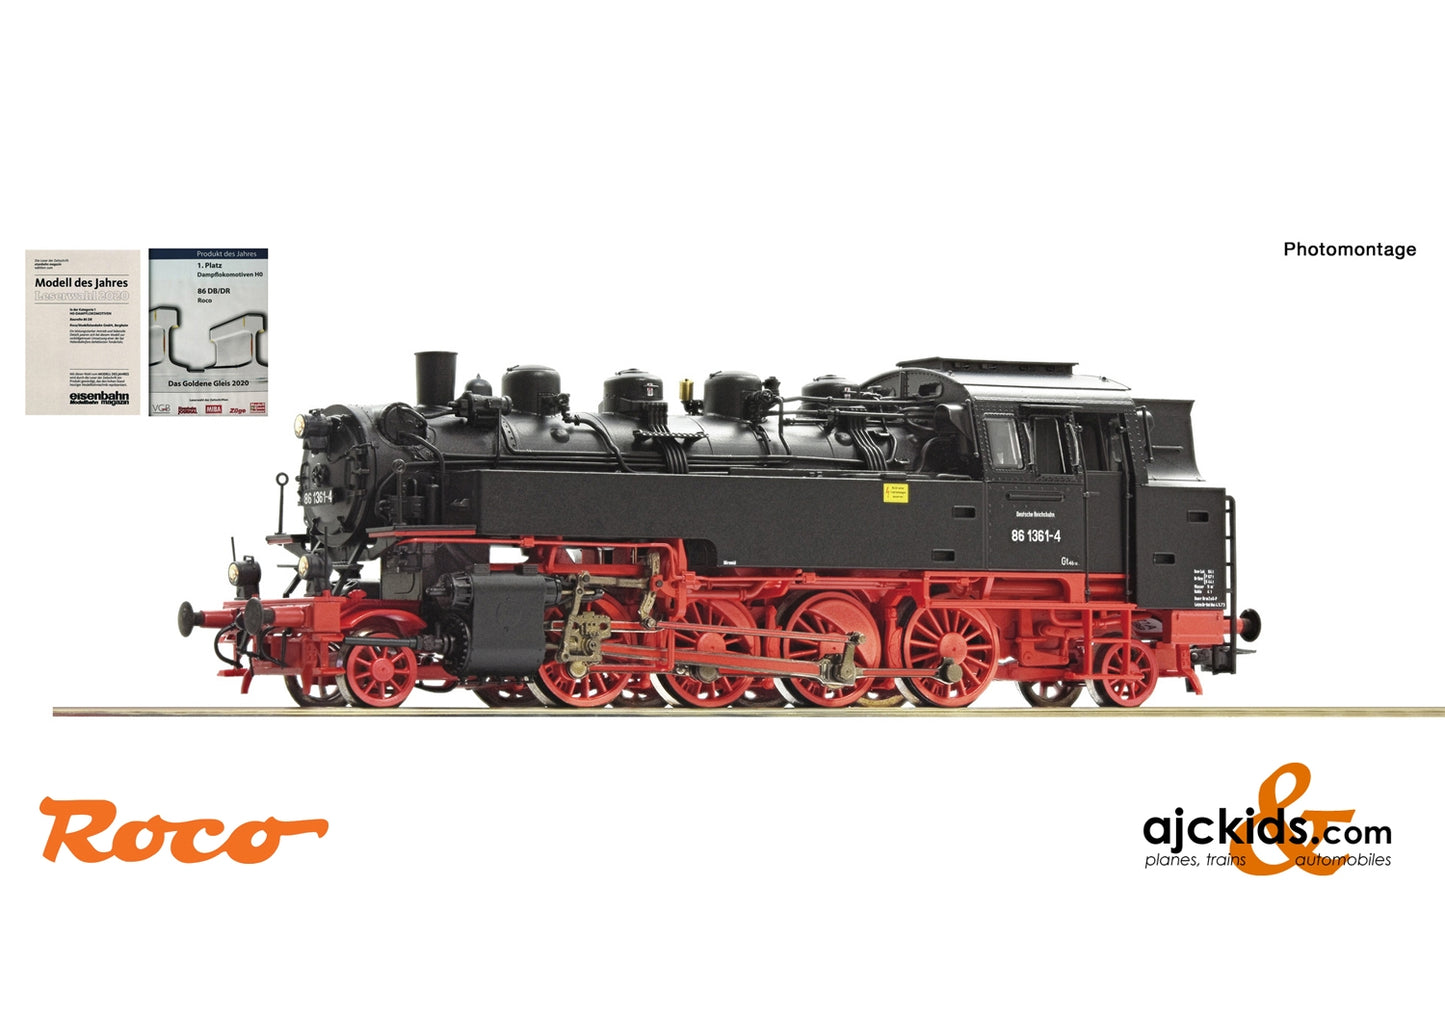 Roco 73032 - Steam locomotive 86 1361-4